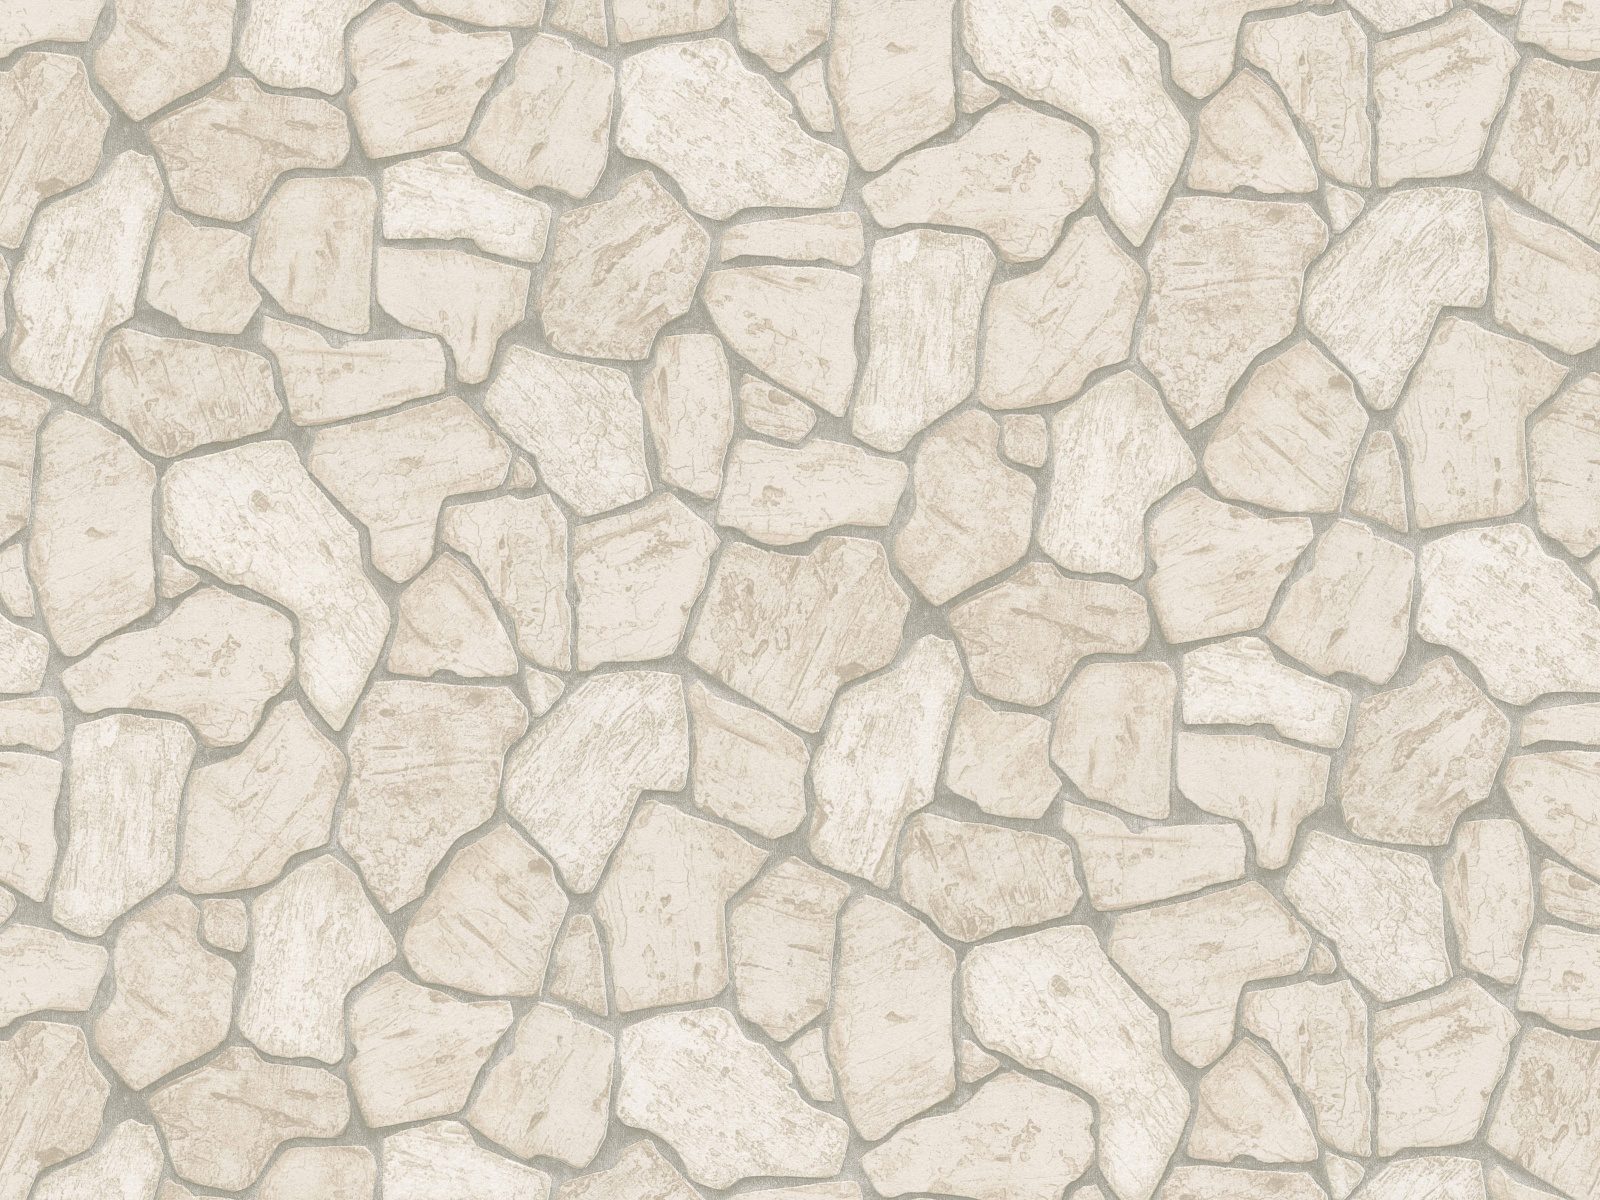 Vliesové tapety so zamatovo hladkými kameňmi s organicky dokonalým tvarom, ER-601545